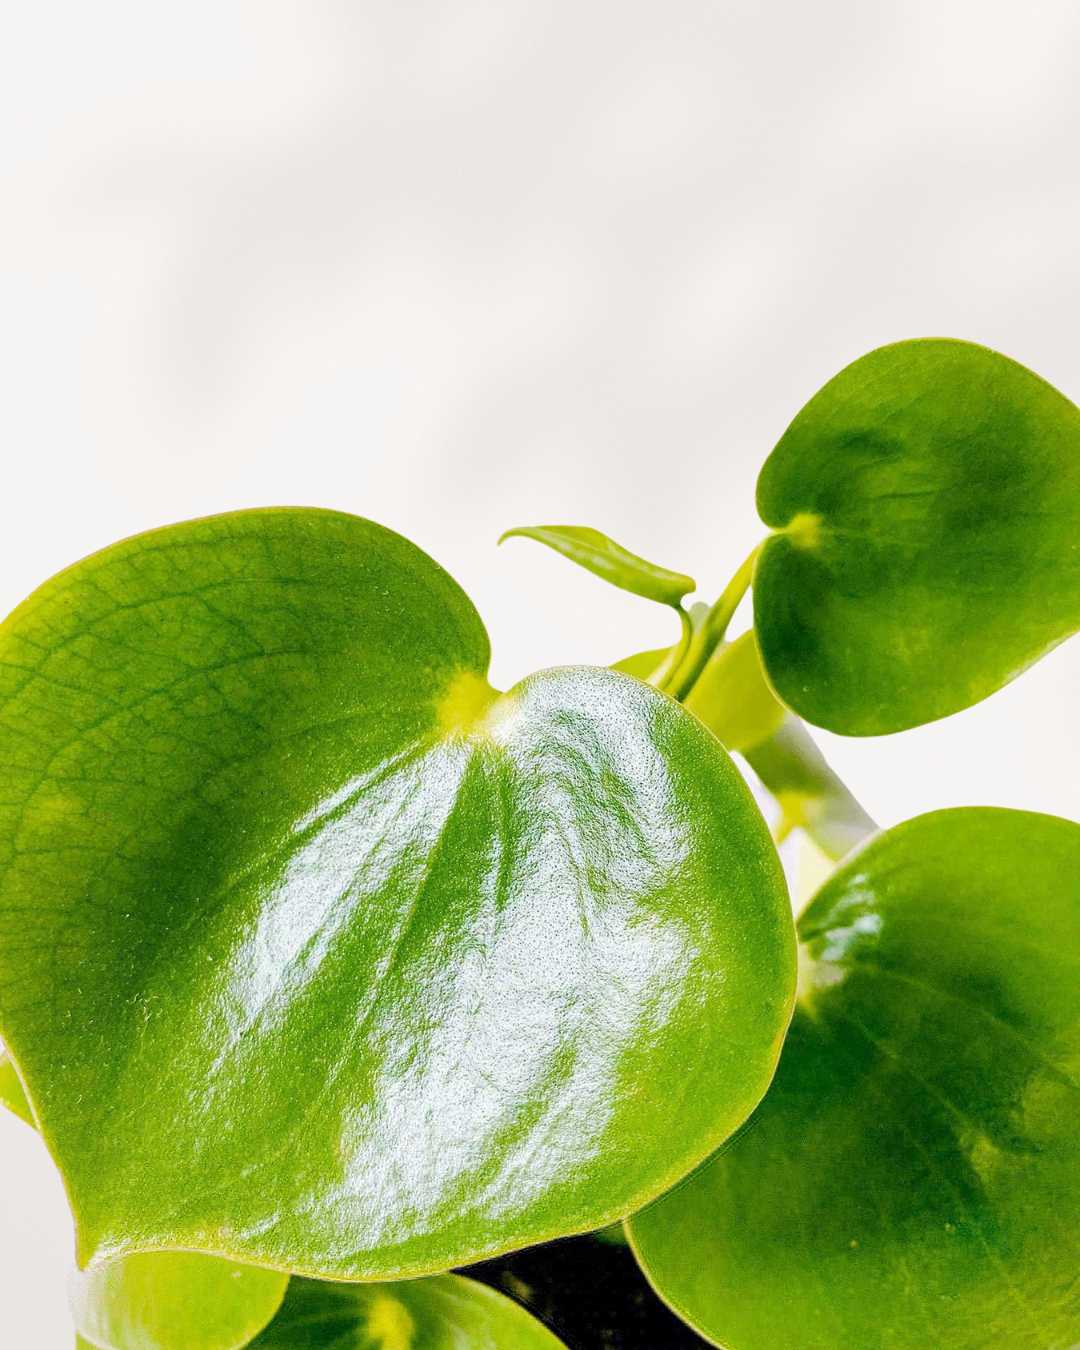 Raindrop Peperomia | Buy Plants Online - Houseplant Delivery & Care 